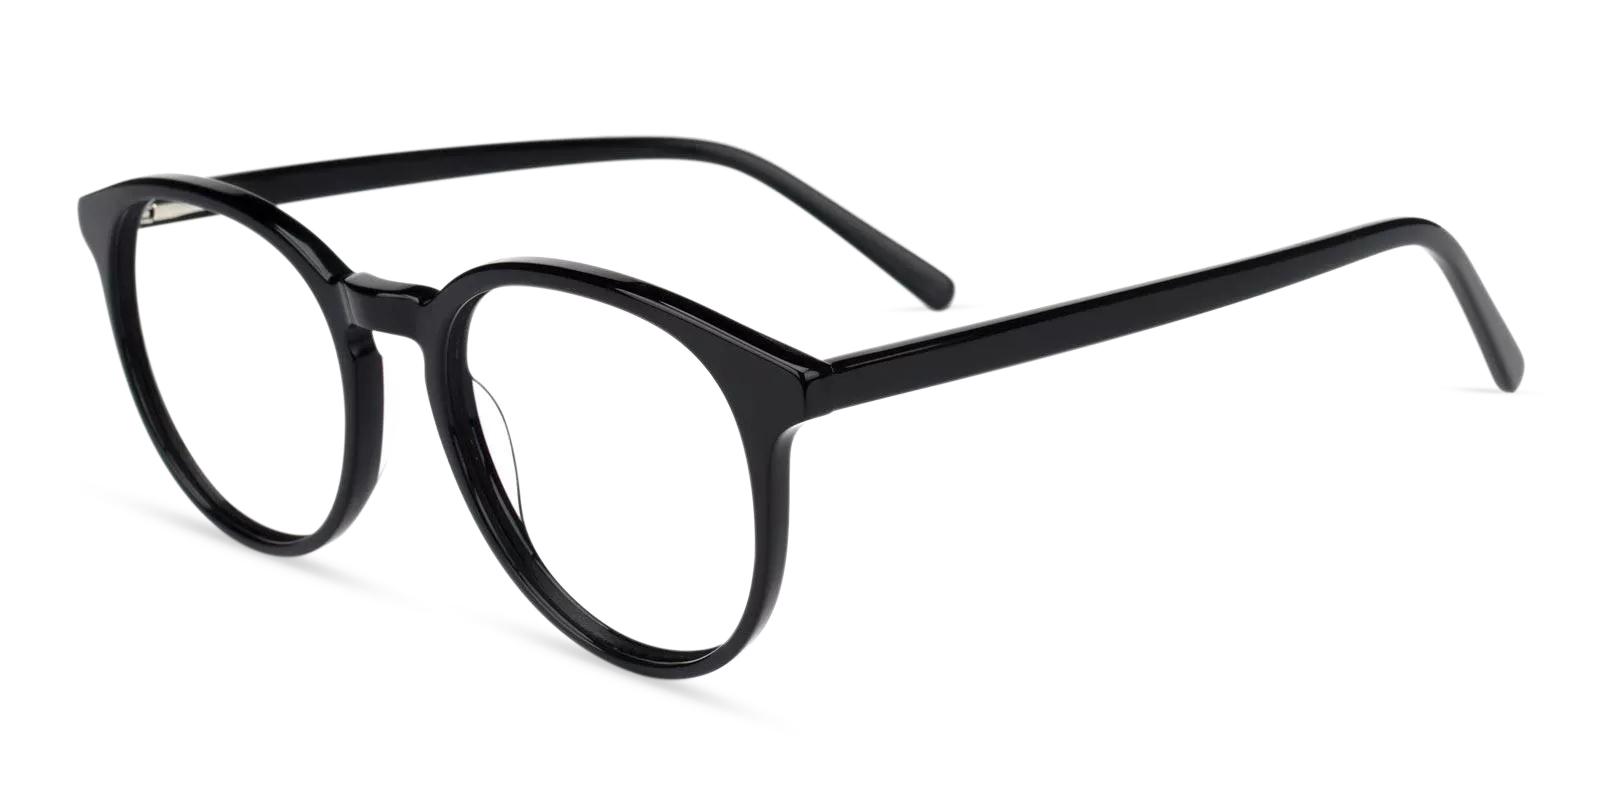 Tammy Black Acetate Eyeglasses , Fashion , SpringHinges , UniversalBridgeFit Frames from ABBE Glasses